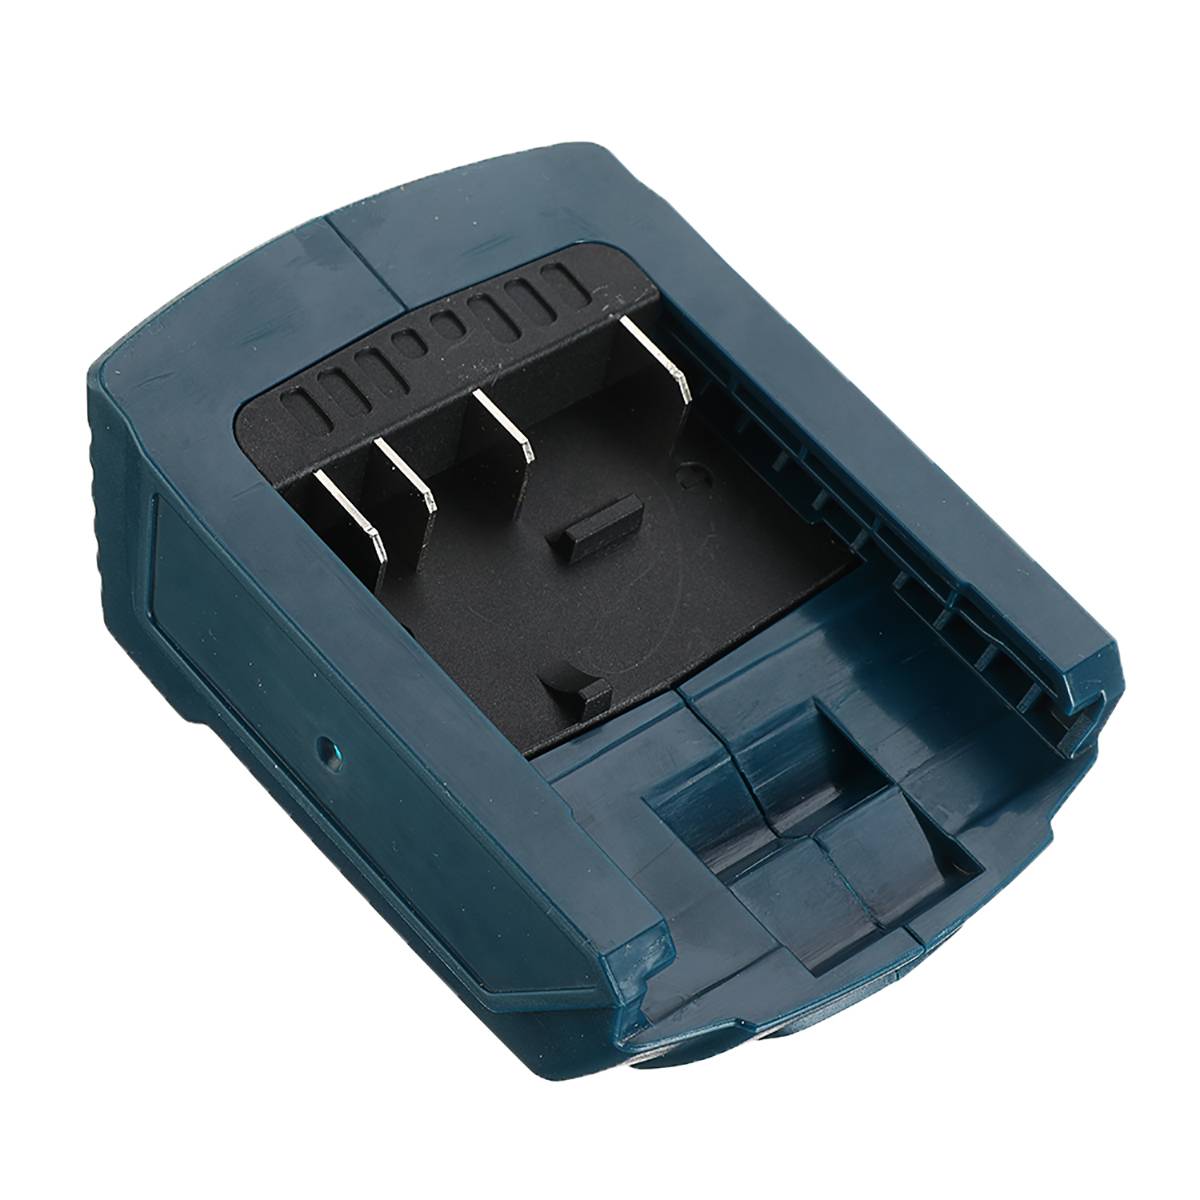 USB Energie Telefon Ladegerät Adapter Konverter für Bosch 18V 3.0/4,0 A Li-Ion Batterie zu Telefon Ladung Ladegerät notfall Energie Versorgung